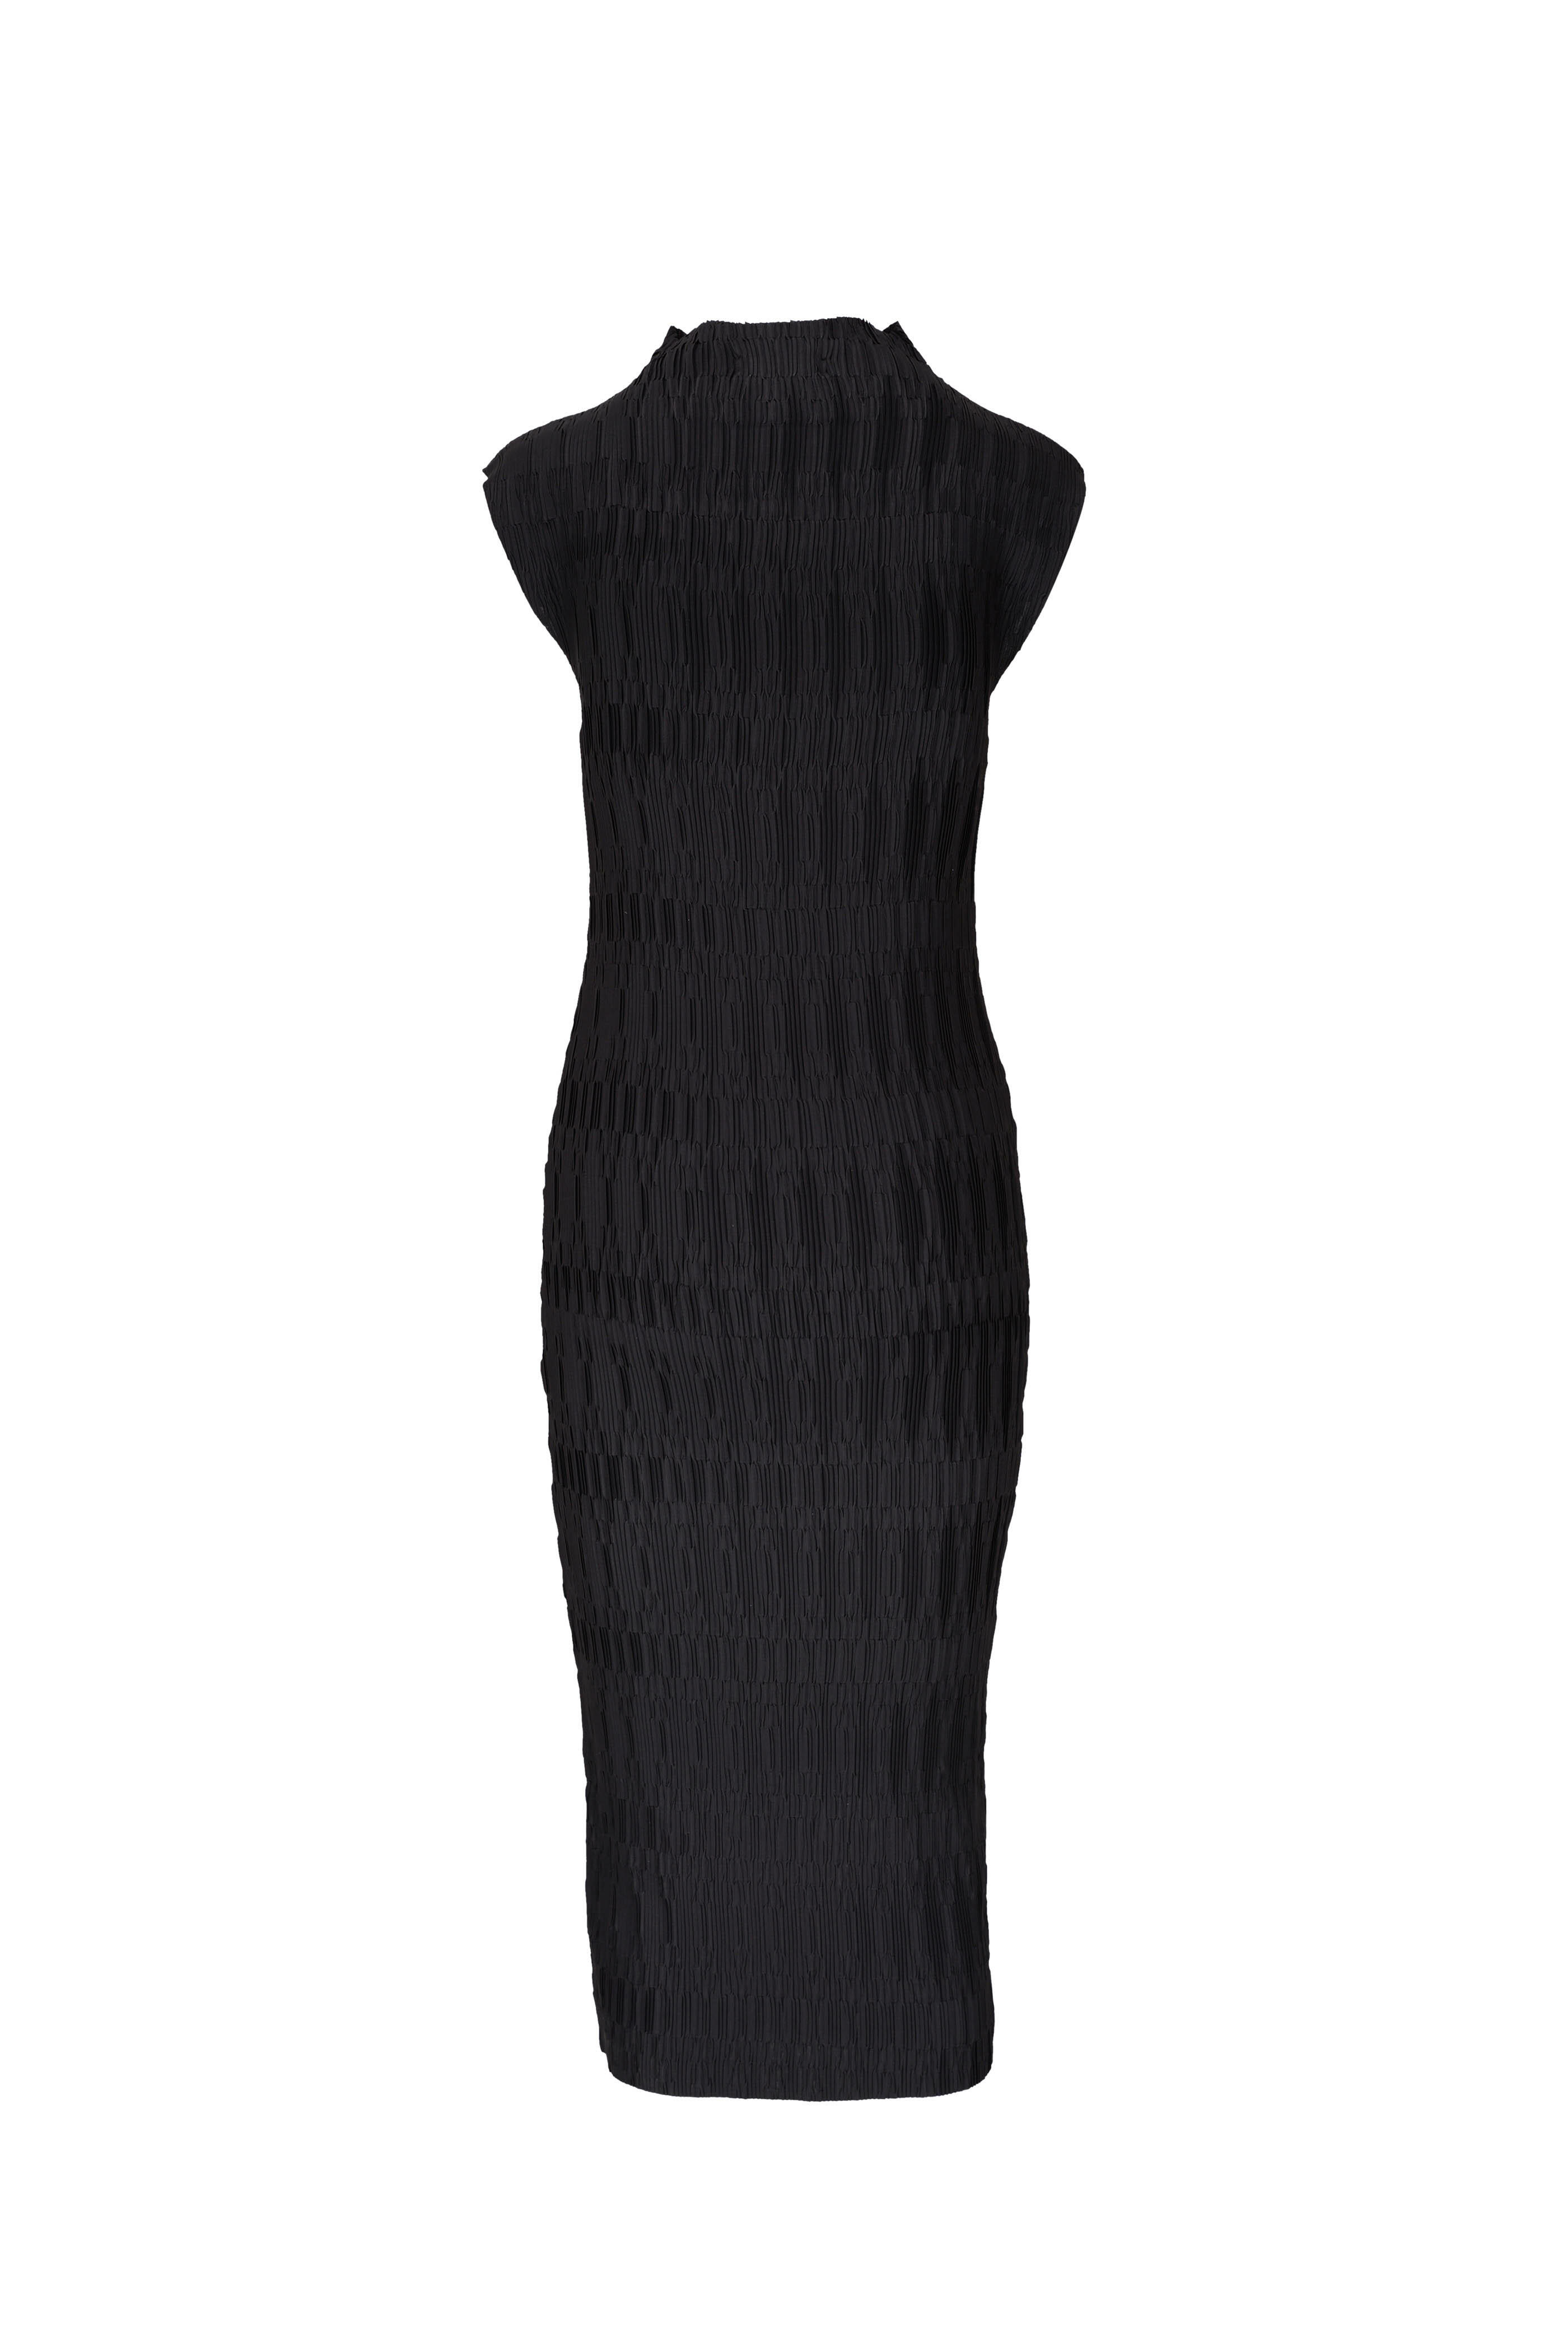 Veronica Beard - Gramercy Black Pleated Satin Dress